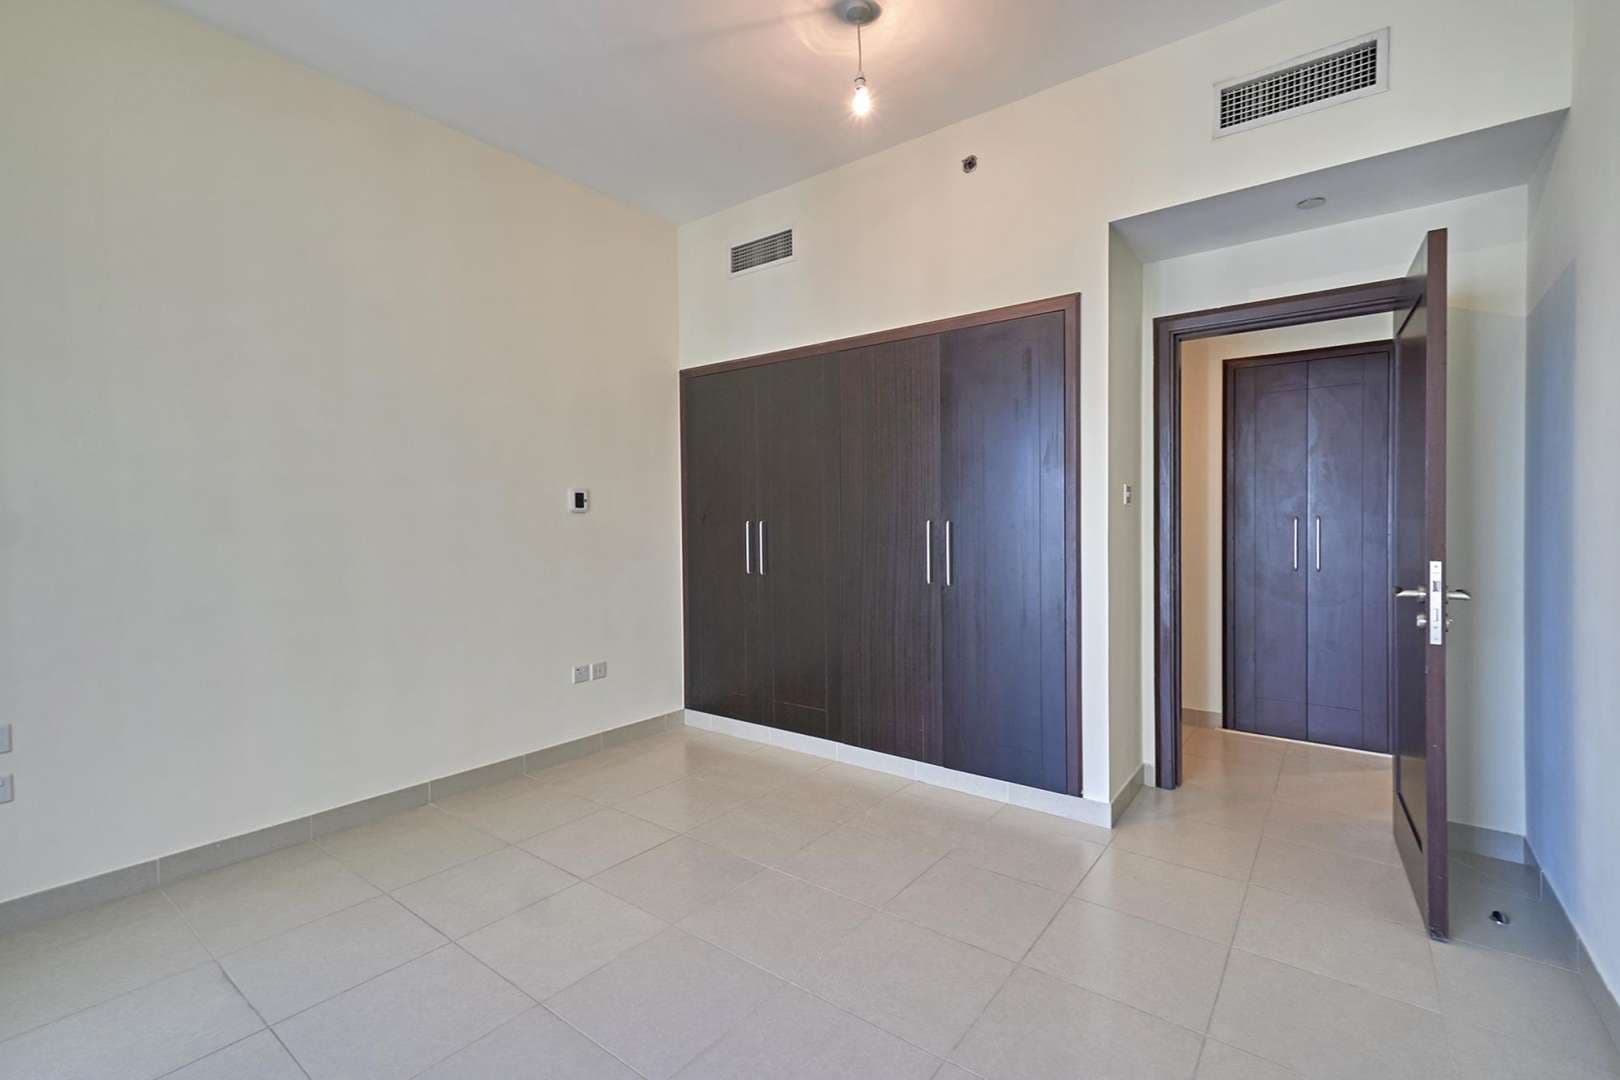 1 Bedroom Apartment For Sale Tanaro Lp06468 15fb3a98438e0100.jpg